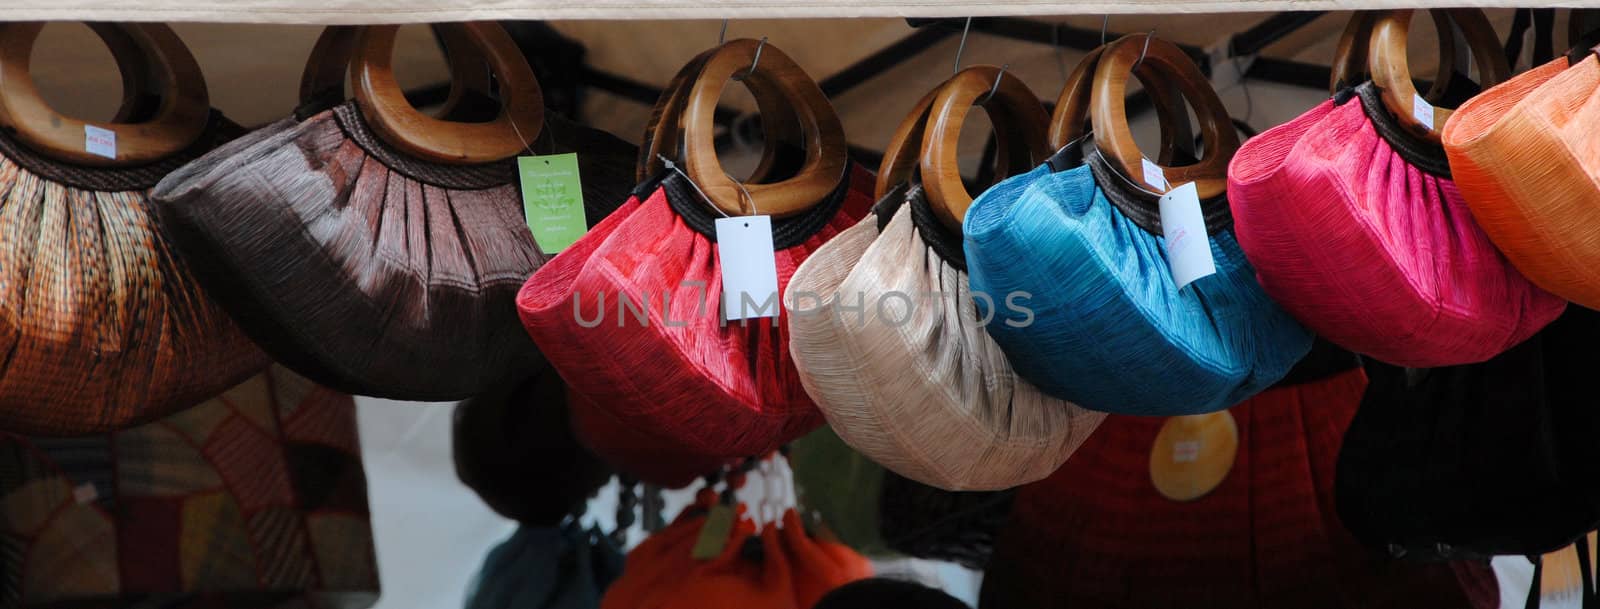 purses on sale at a street market